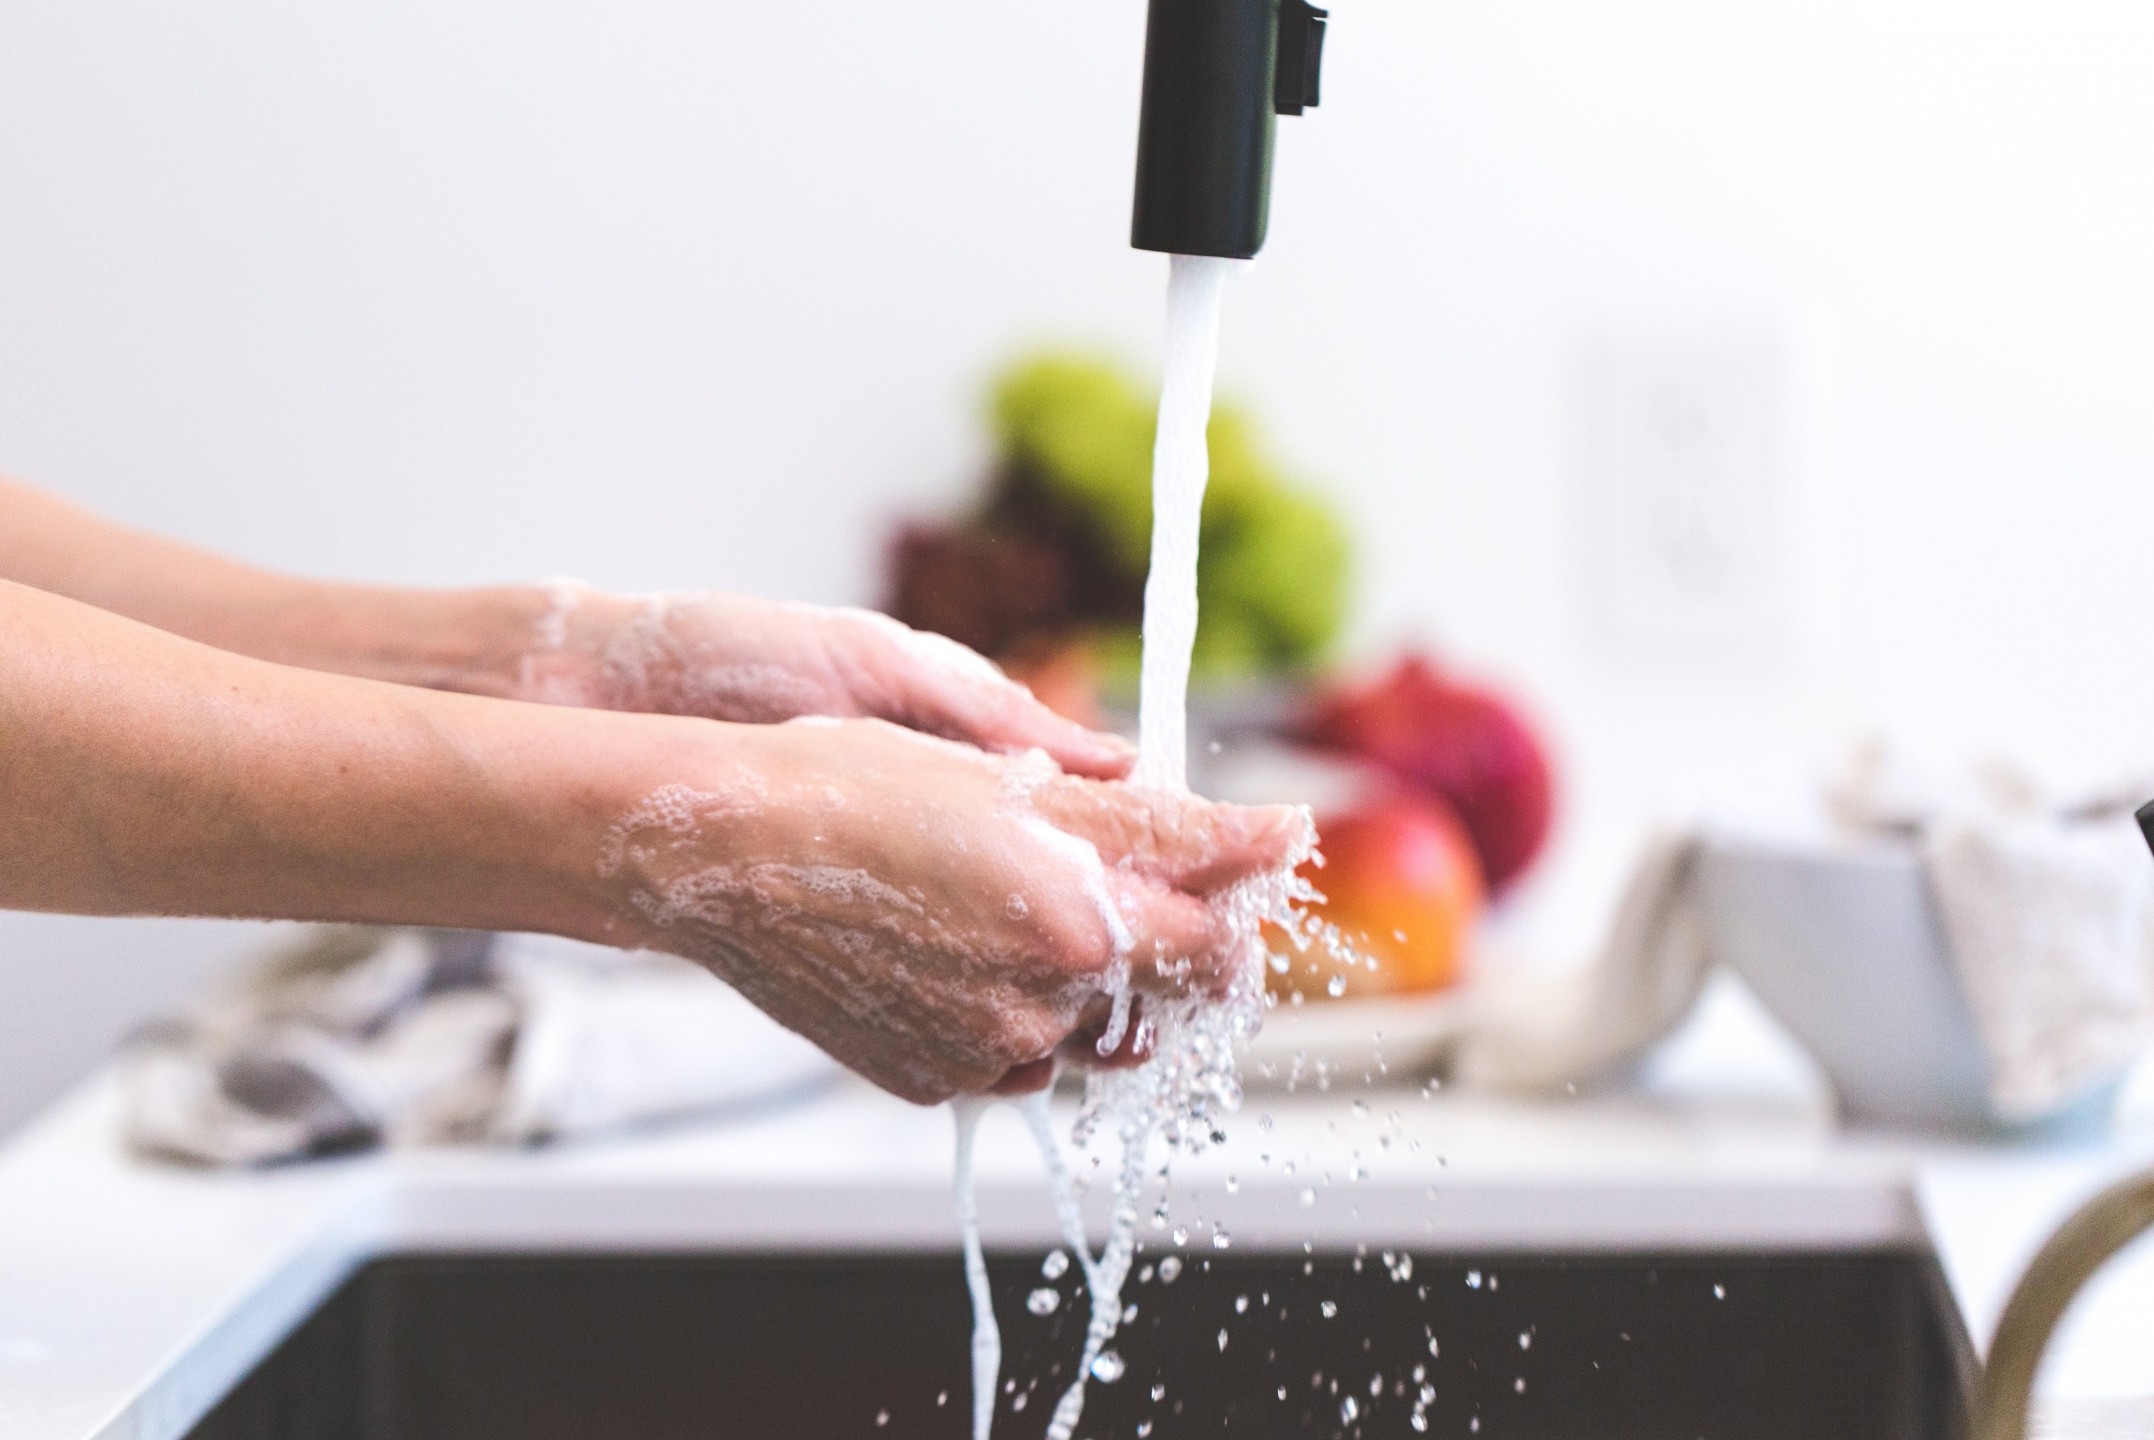 squarerooms-cooking-hands-handwashing-health-sink-kitchen-clean-water